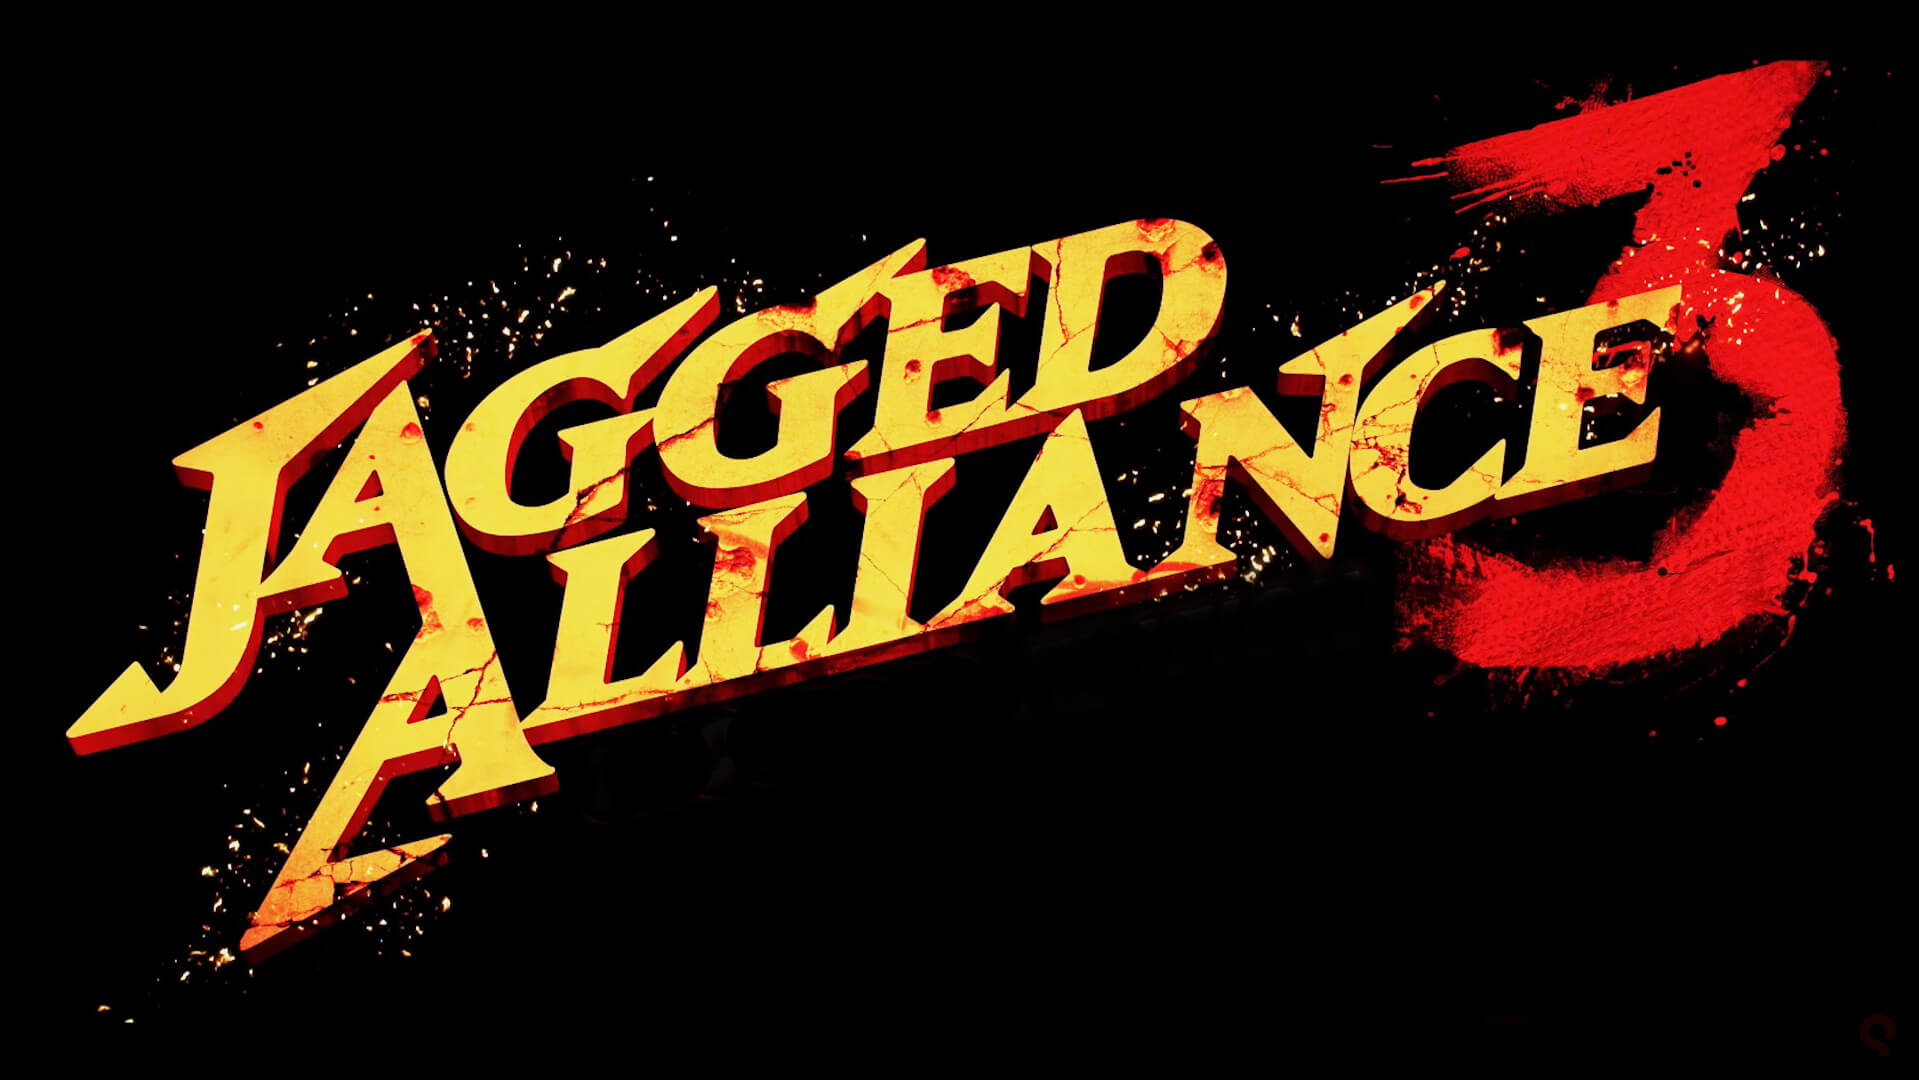 Jagged alliance 2 gold steam фото 52